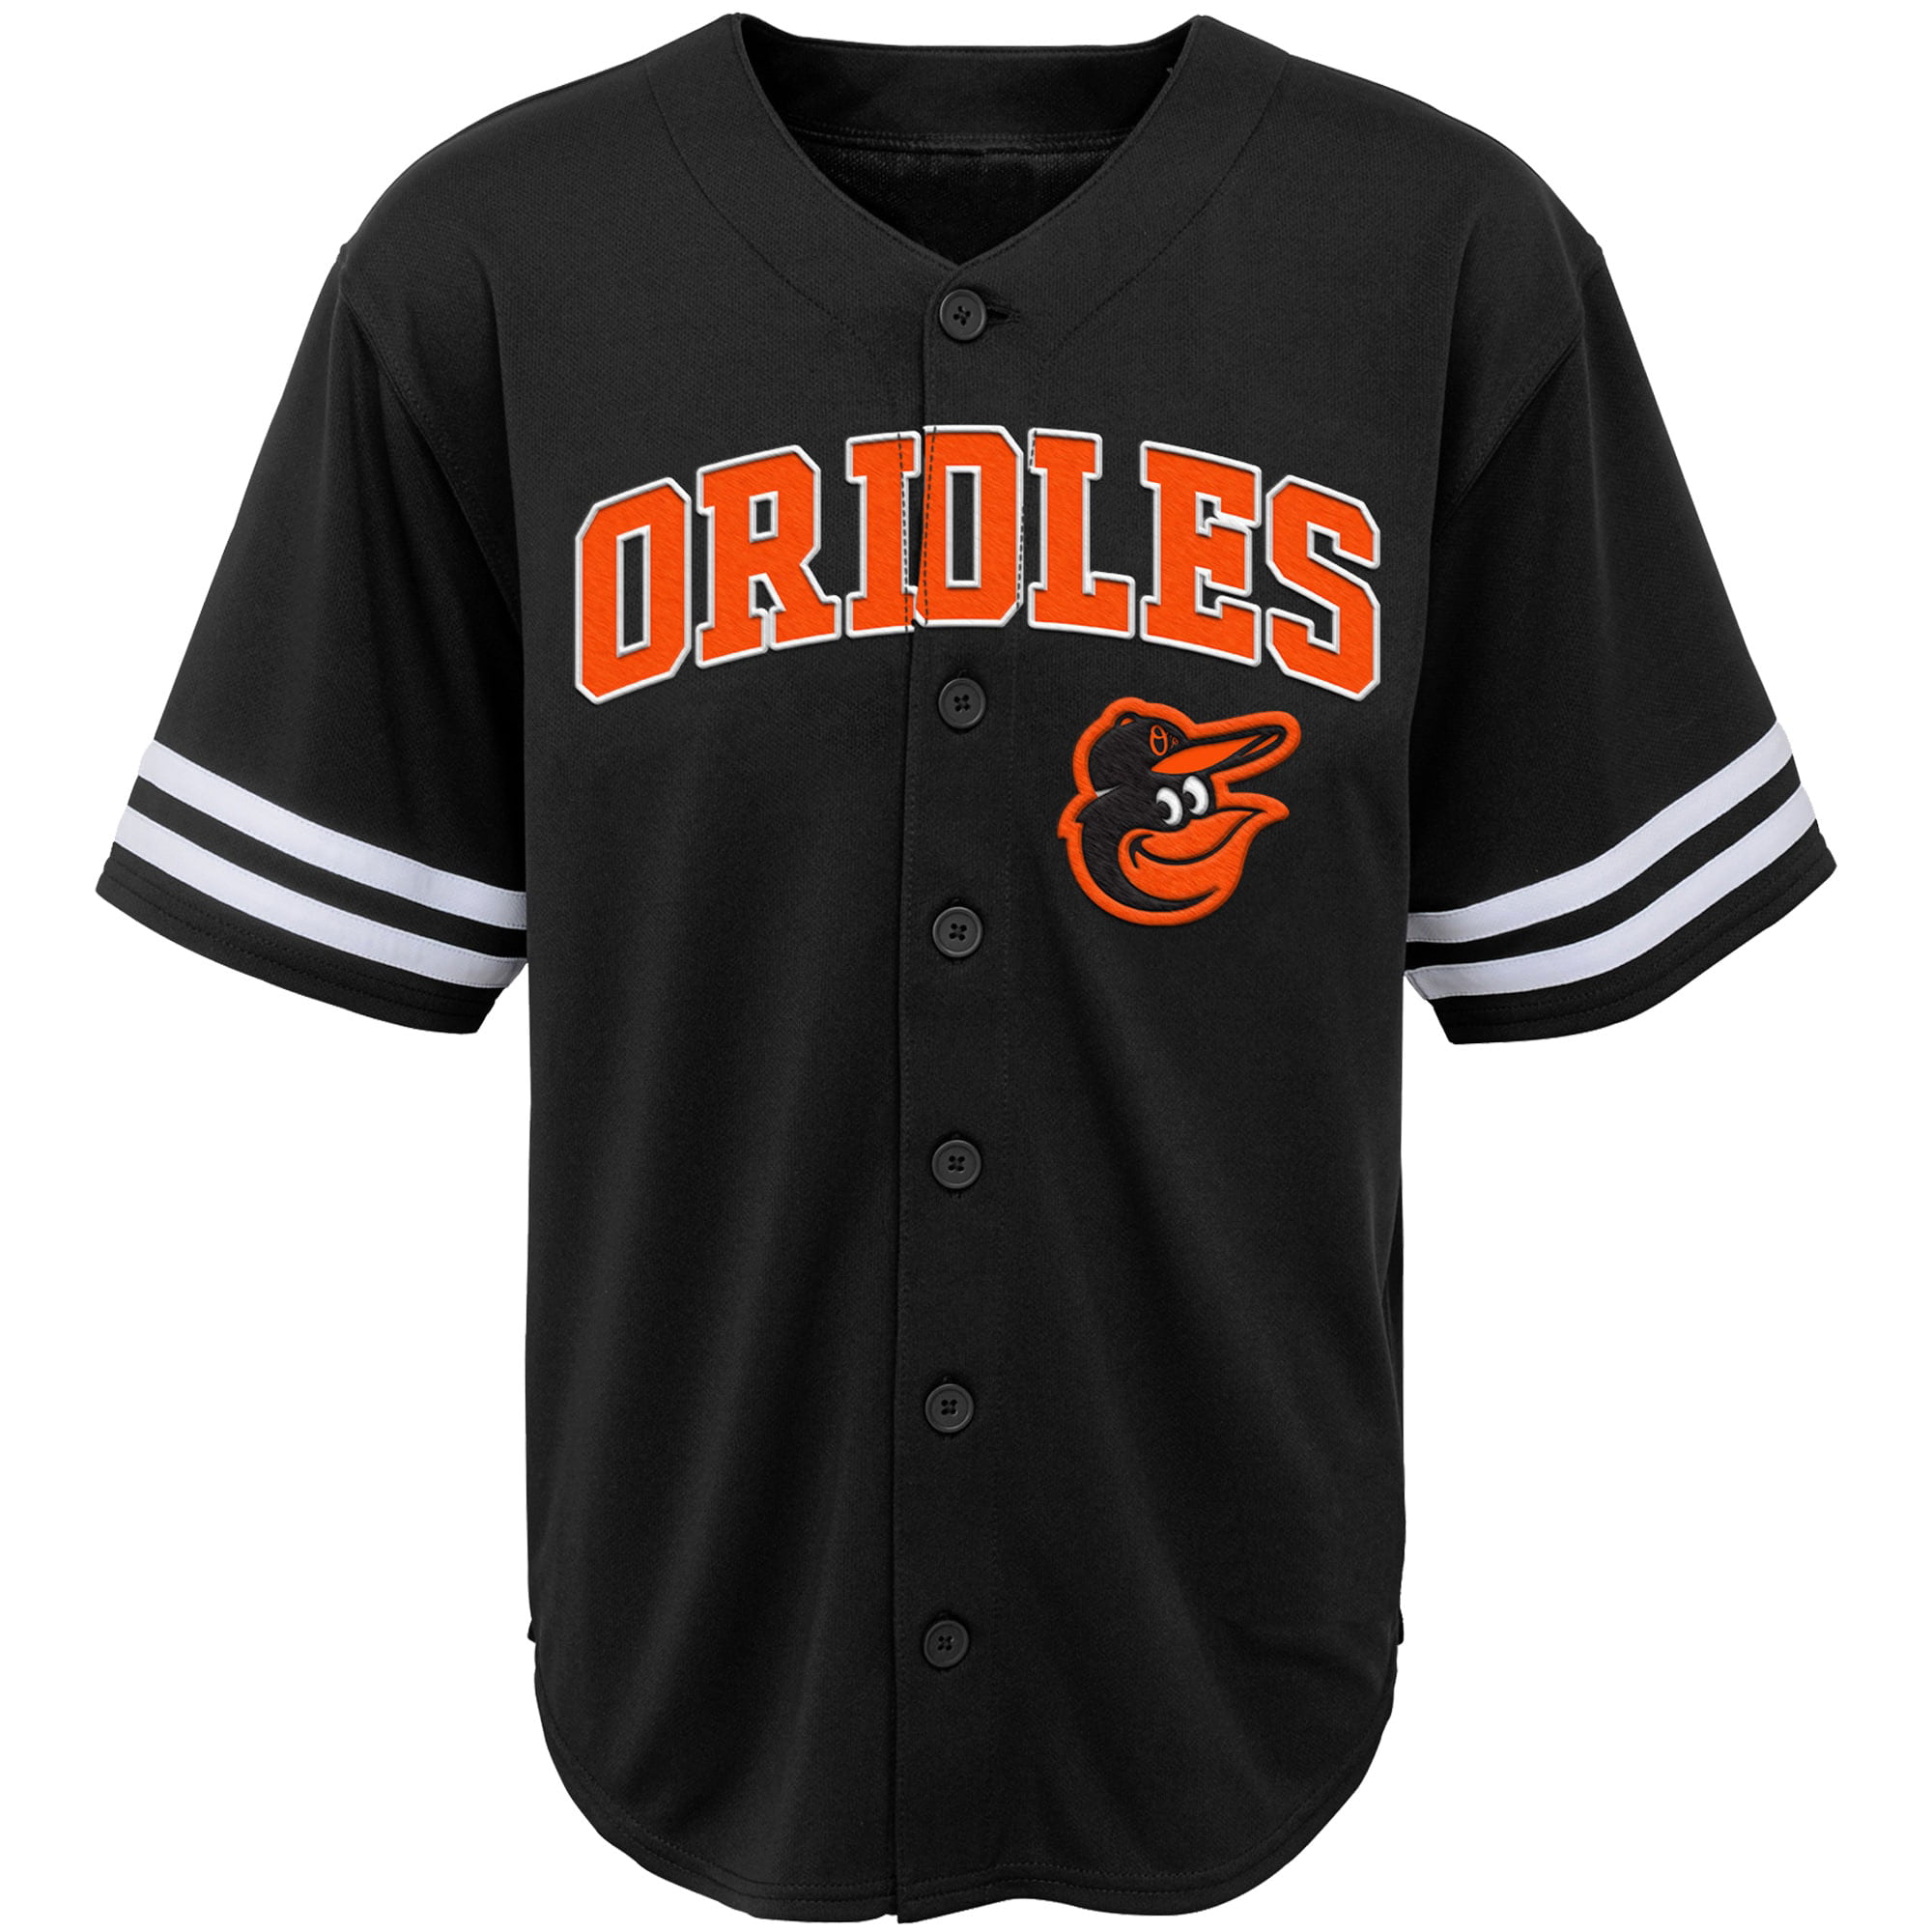 Baltimore Orioles Uniform Letters Bird Kids Toddler T-Shirt 